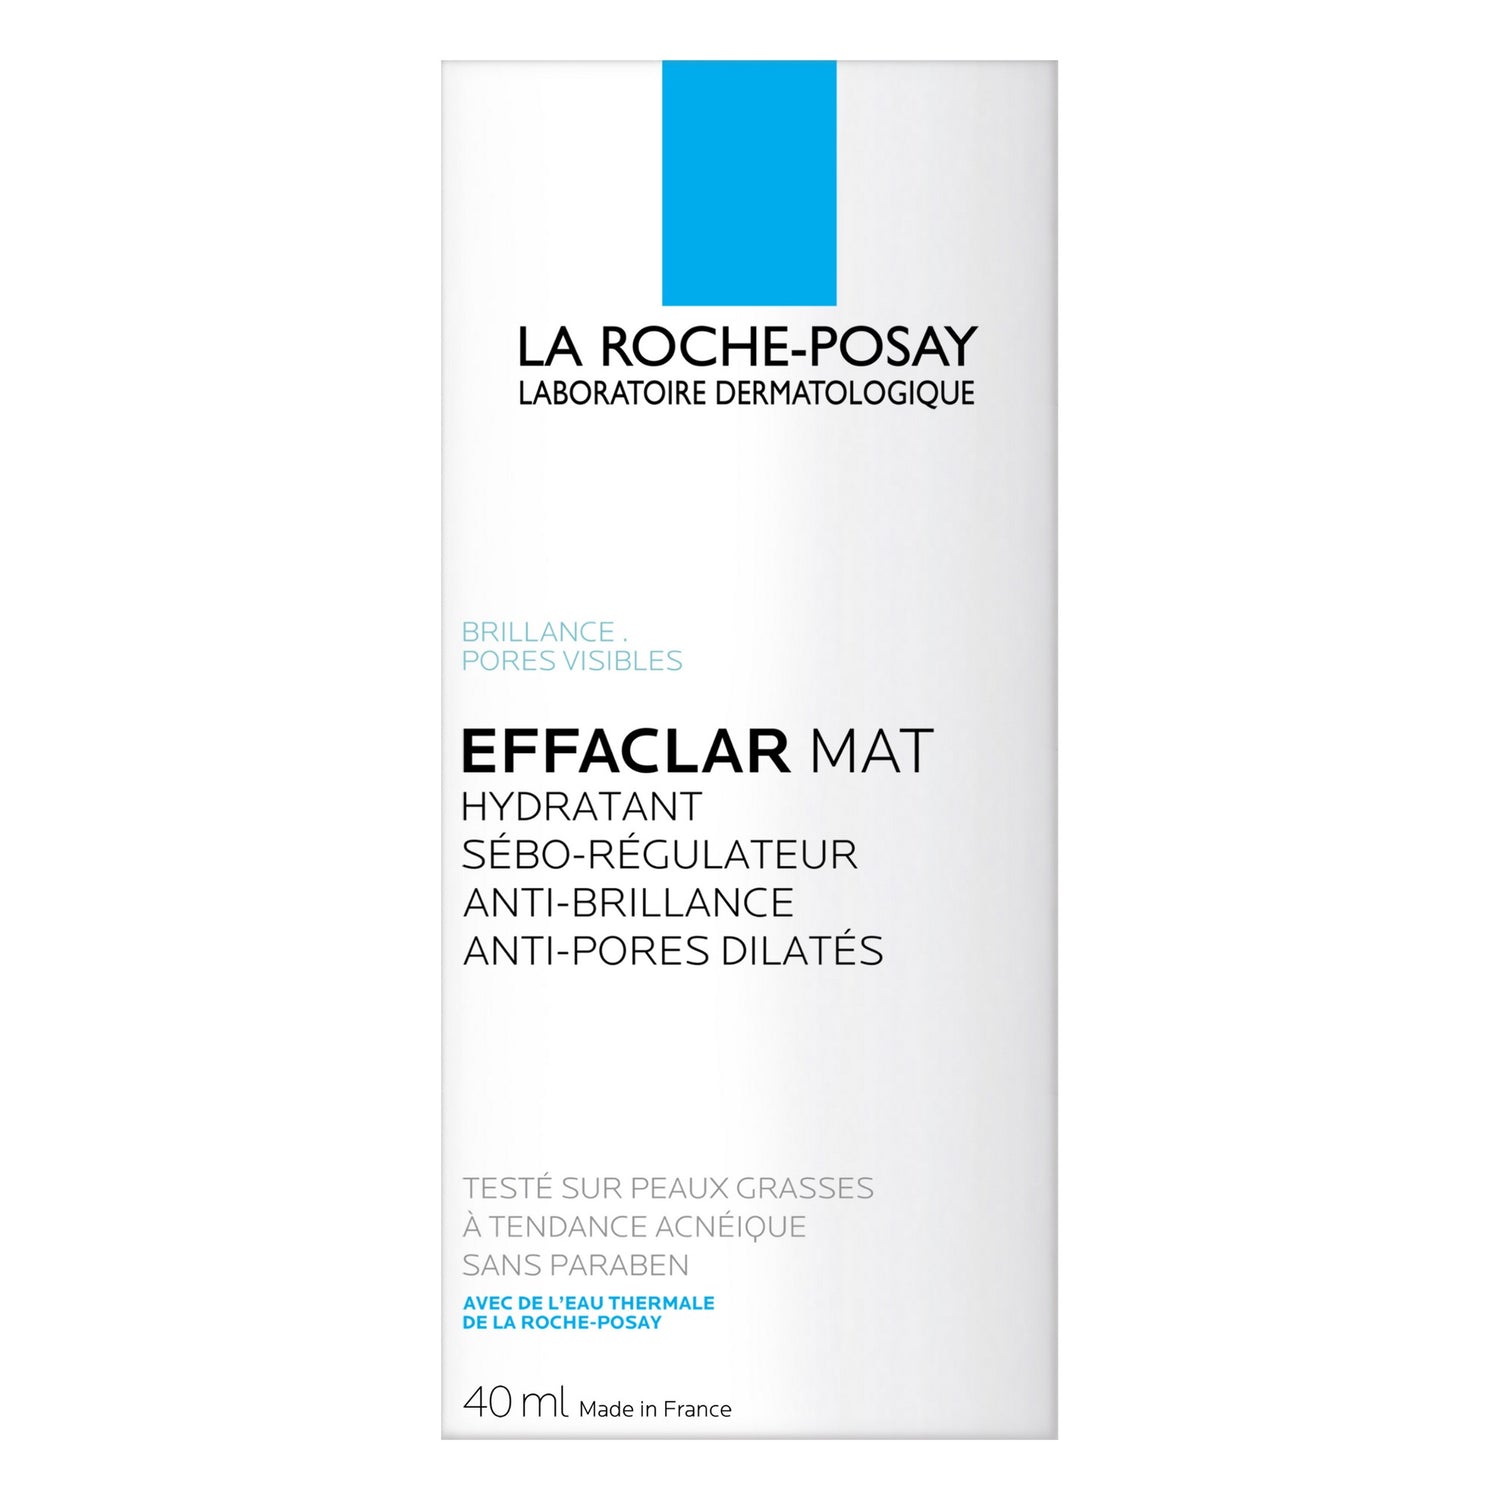 La Roche Posay Effaclar MAT+ 40ml Box Front